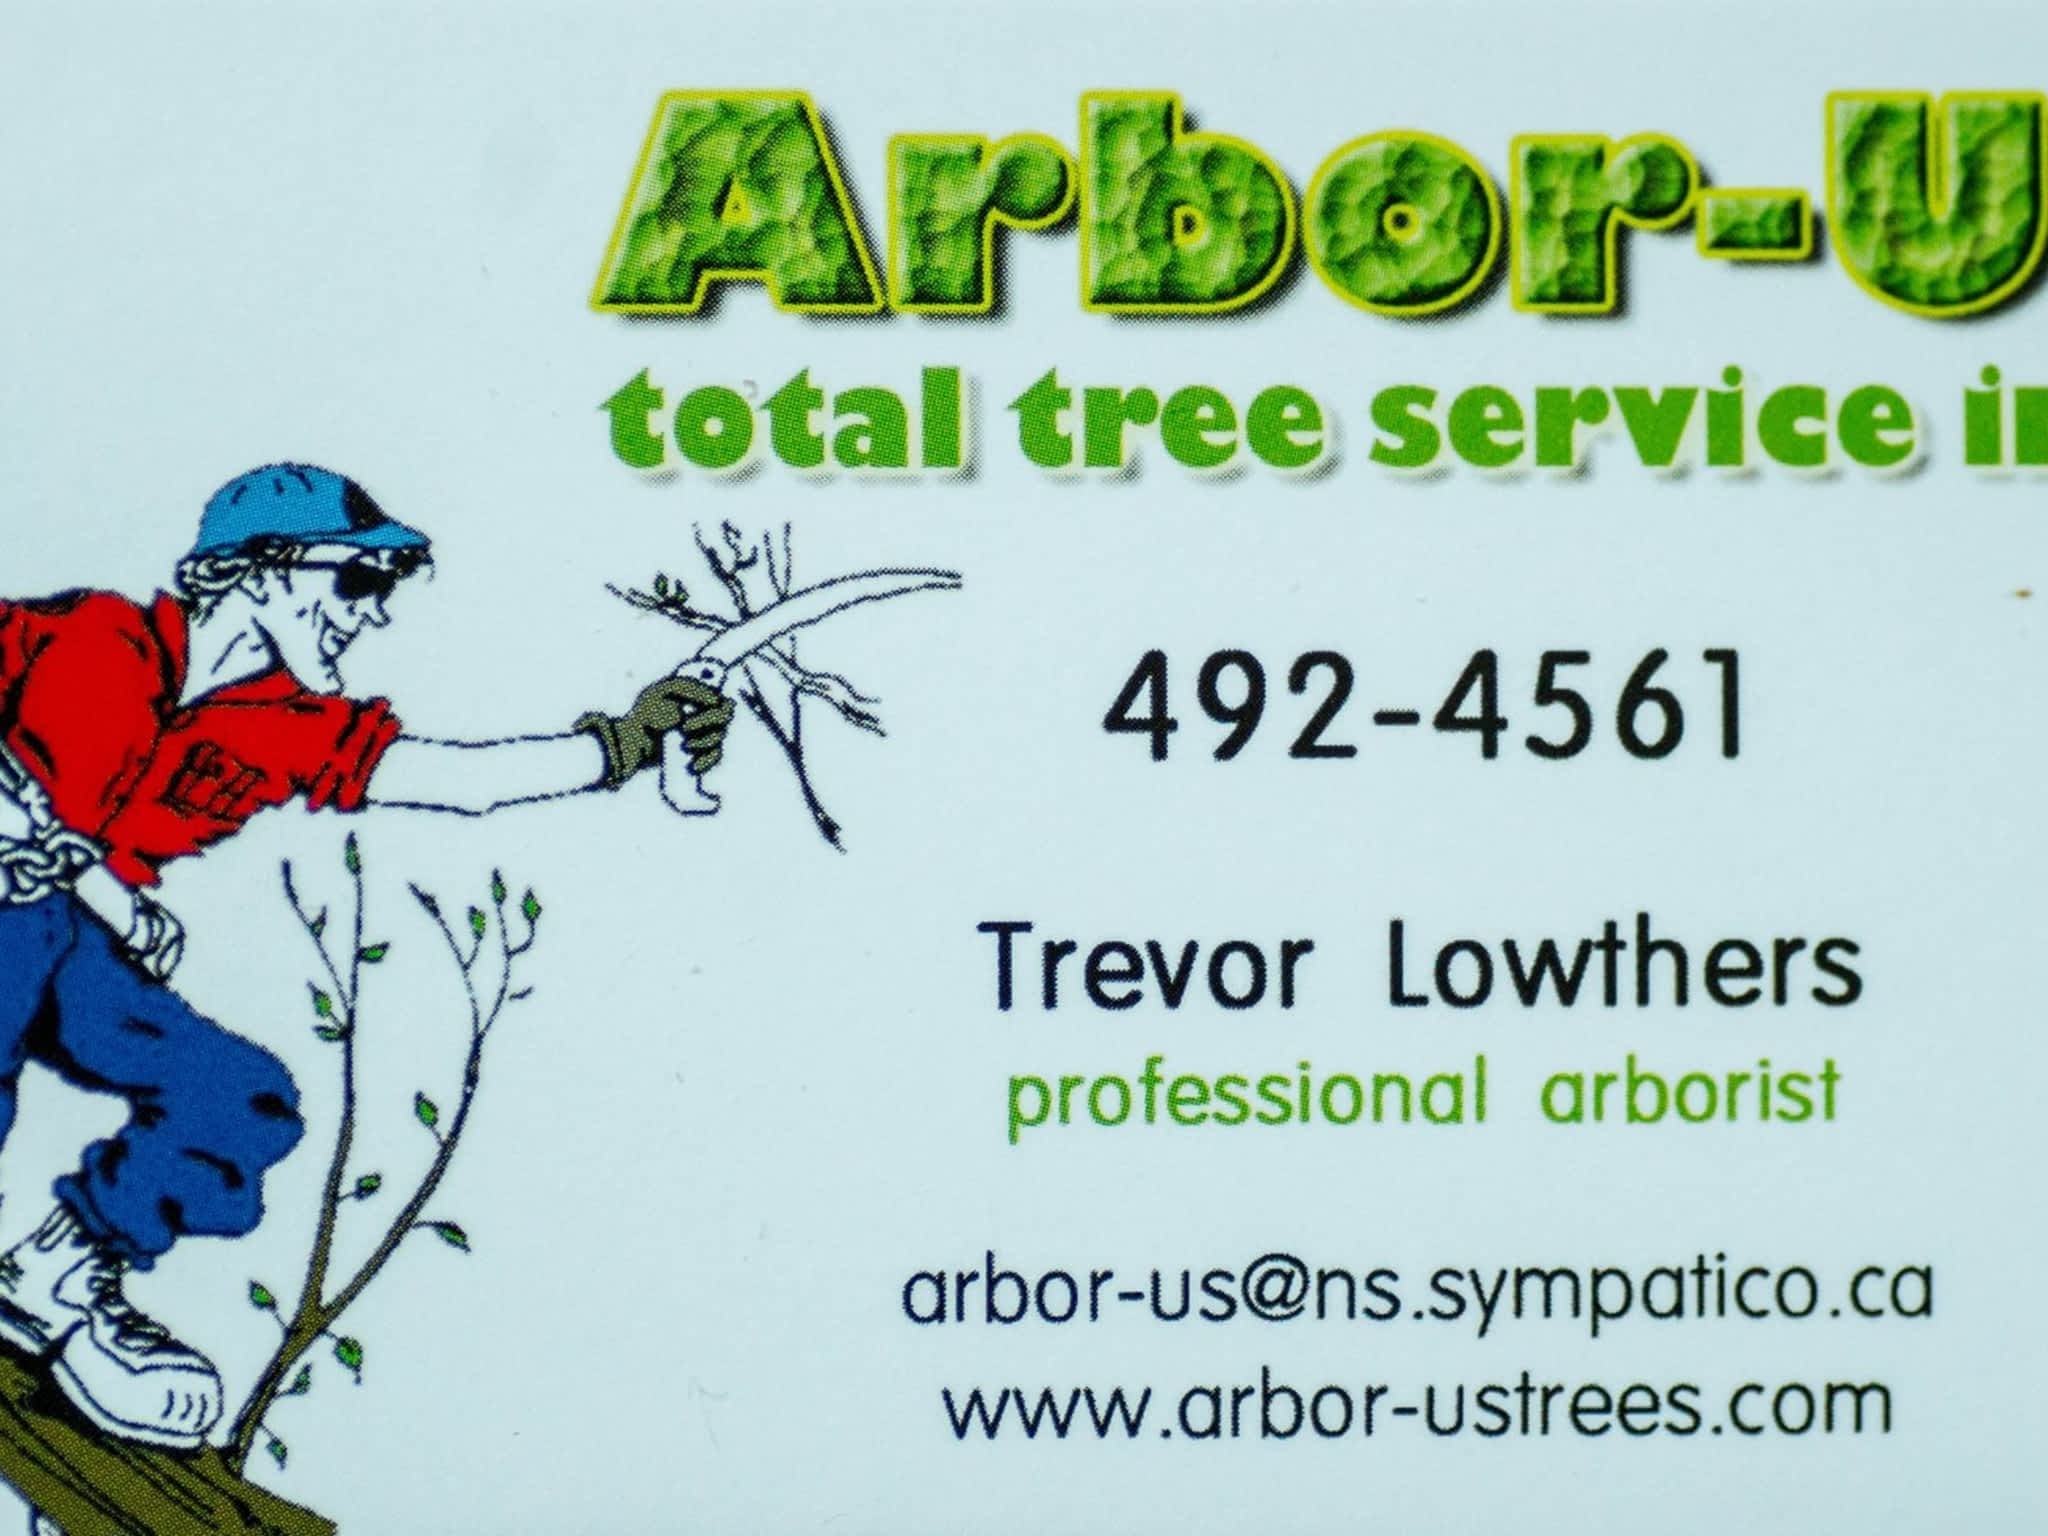 photo Arbor-Us Total Tree Service